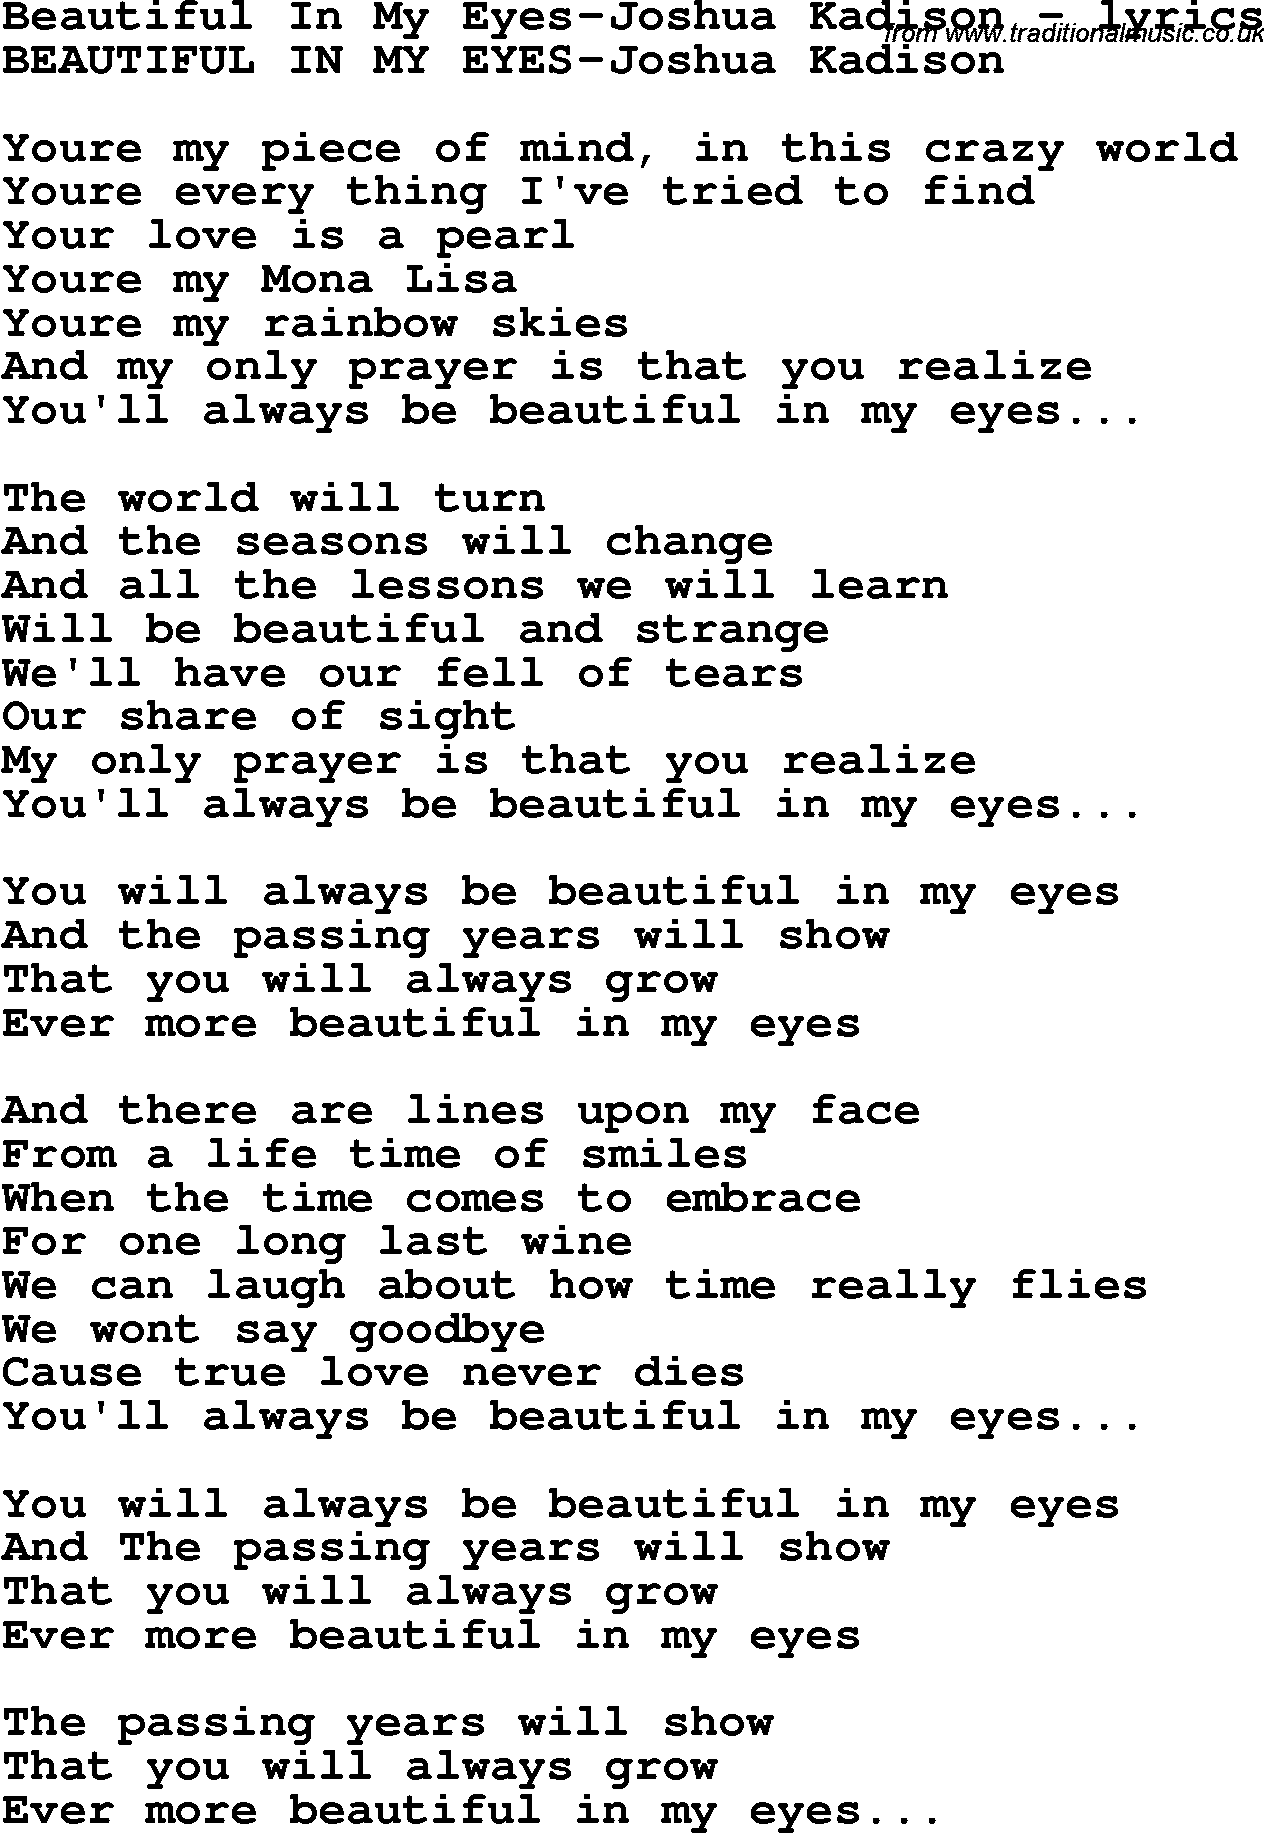 Love Song Lyrics for: Beautiful In My Eyes-Joshua Kadison